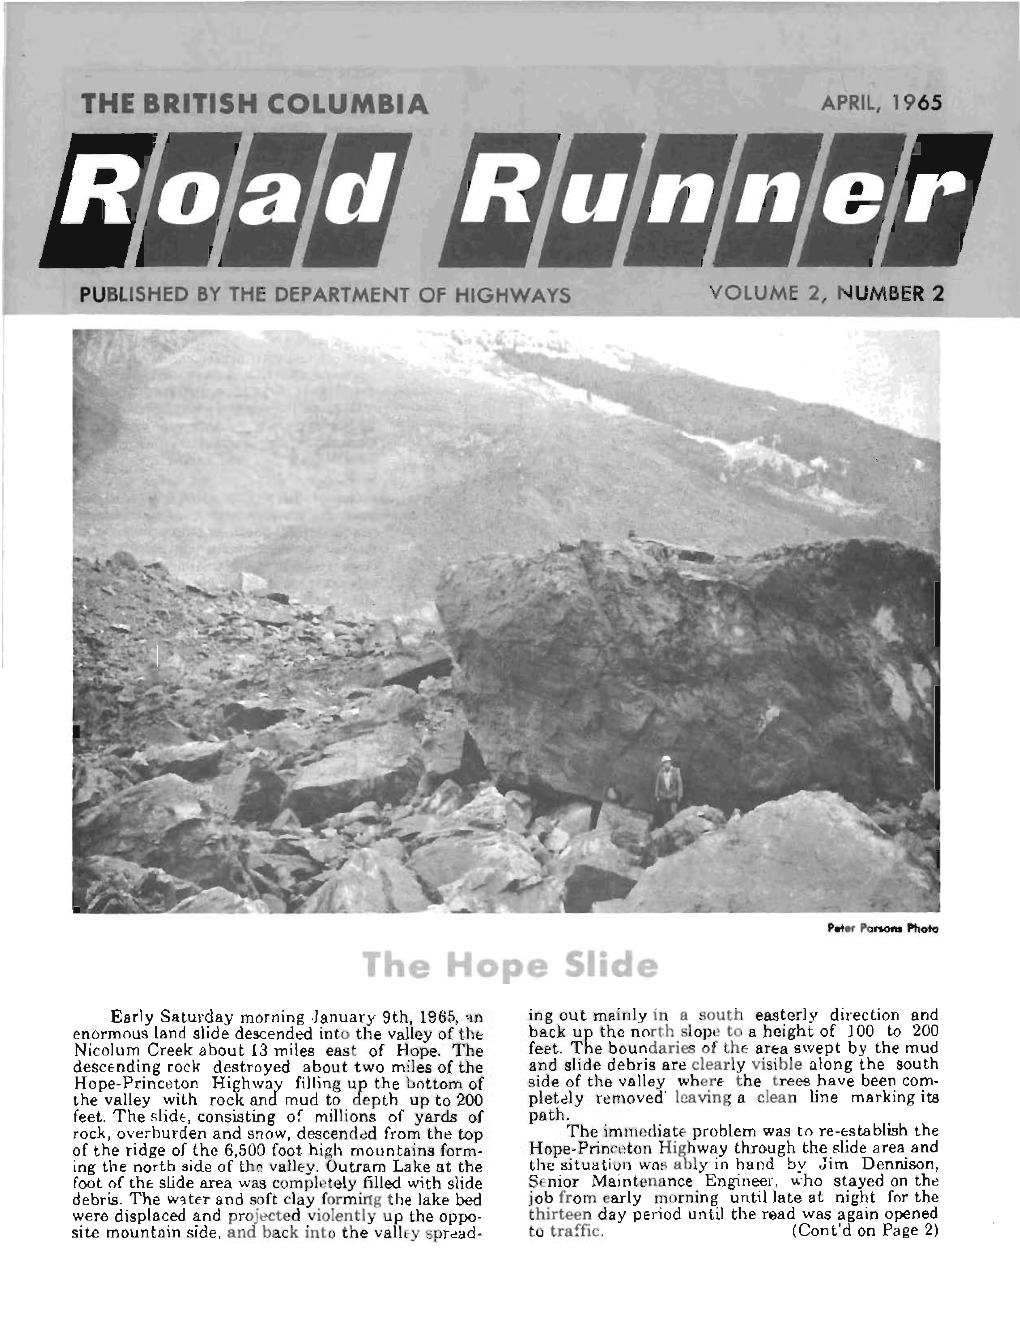 The British Columbia Road Runner, April 1965, Volume 2, Number 2